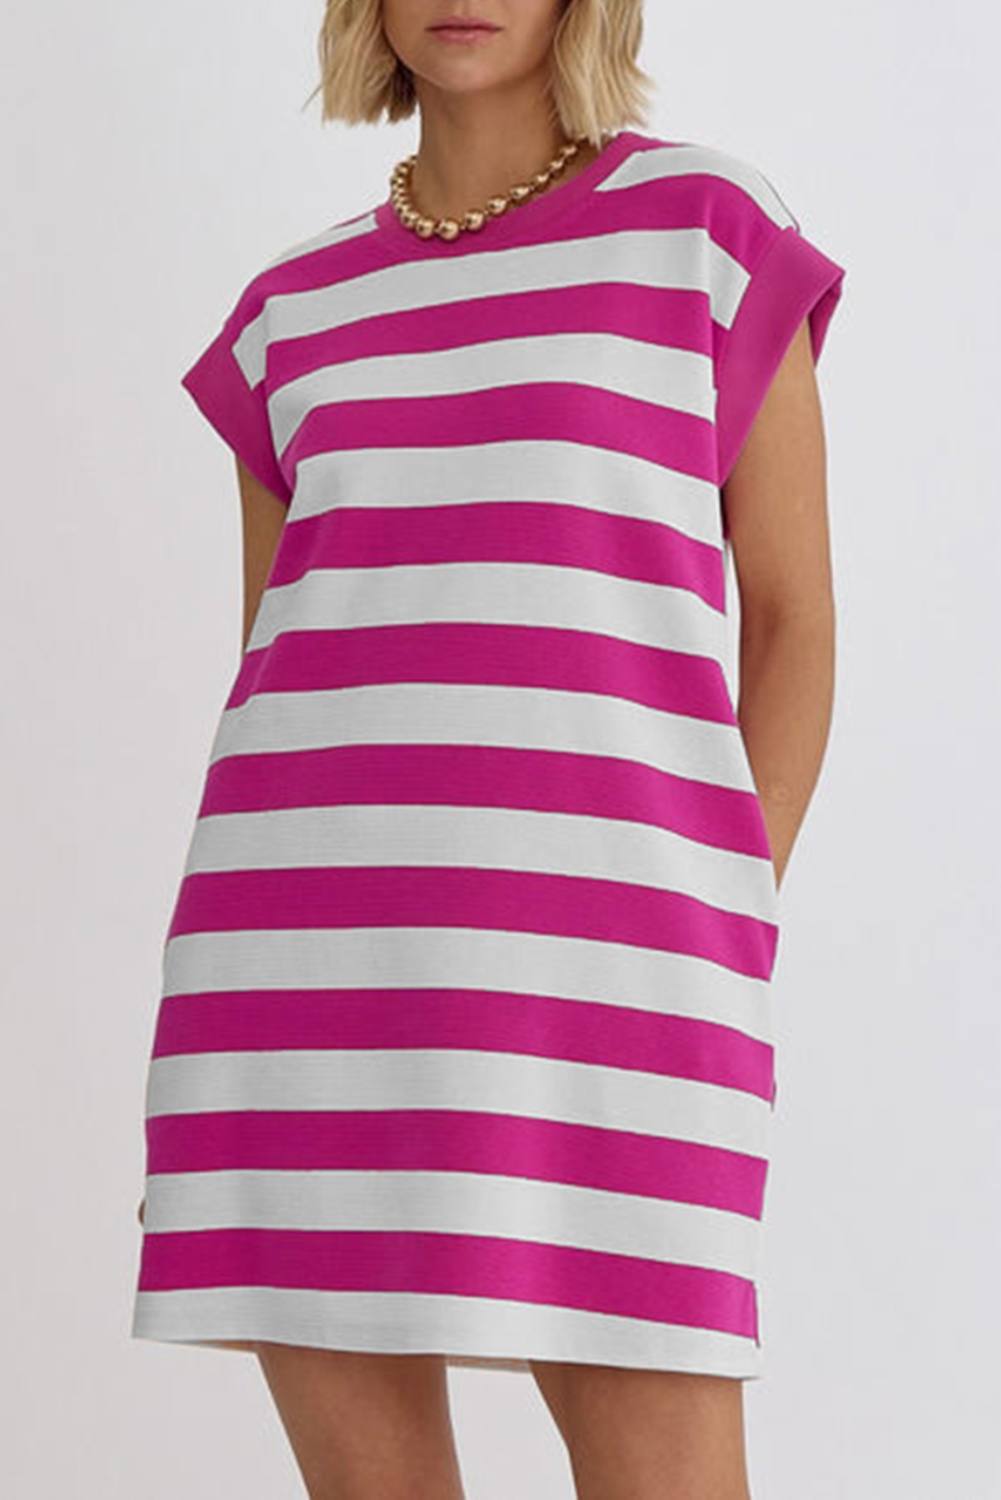 Shewin Wholesale Elegant Rose Stripe Cap Sleeve Pocketed T-SHIRT Dress